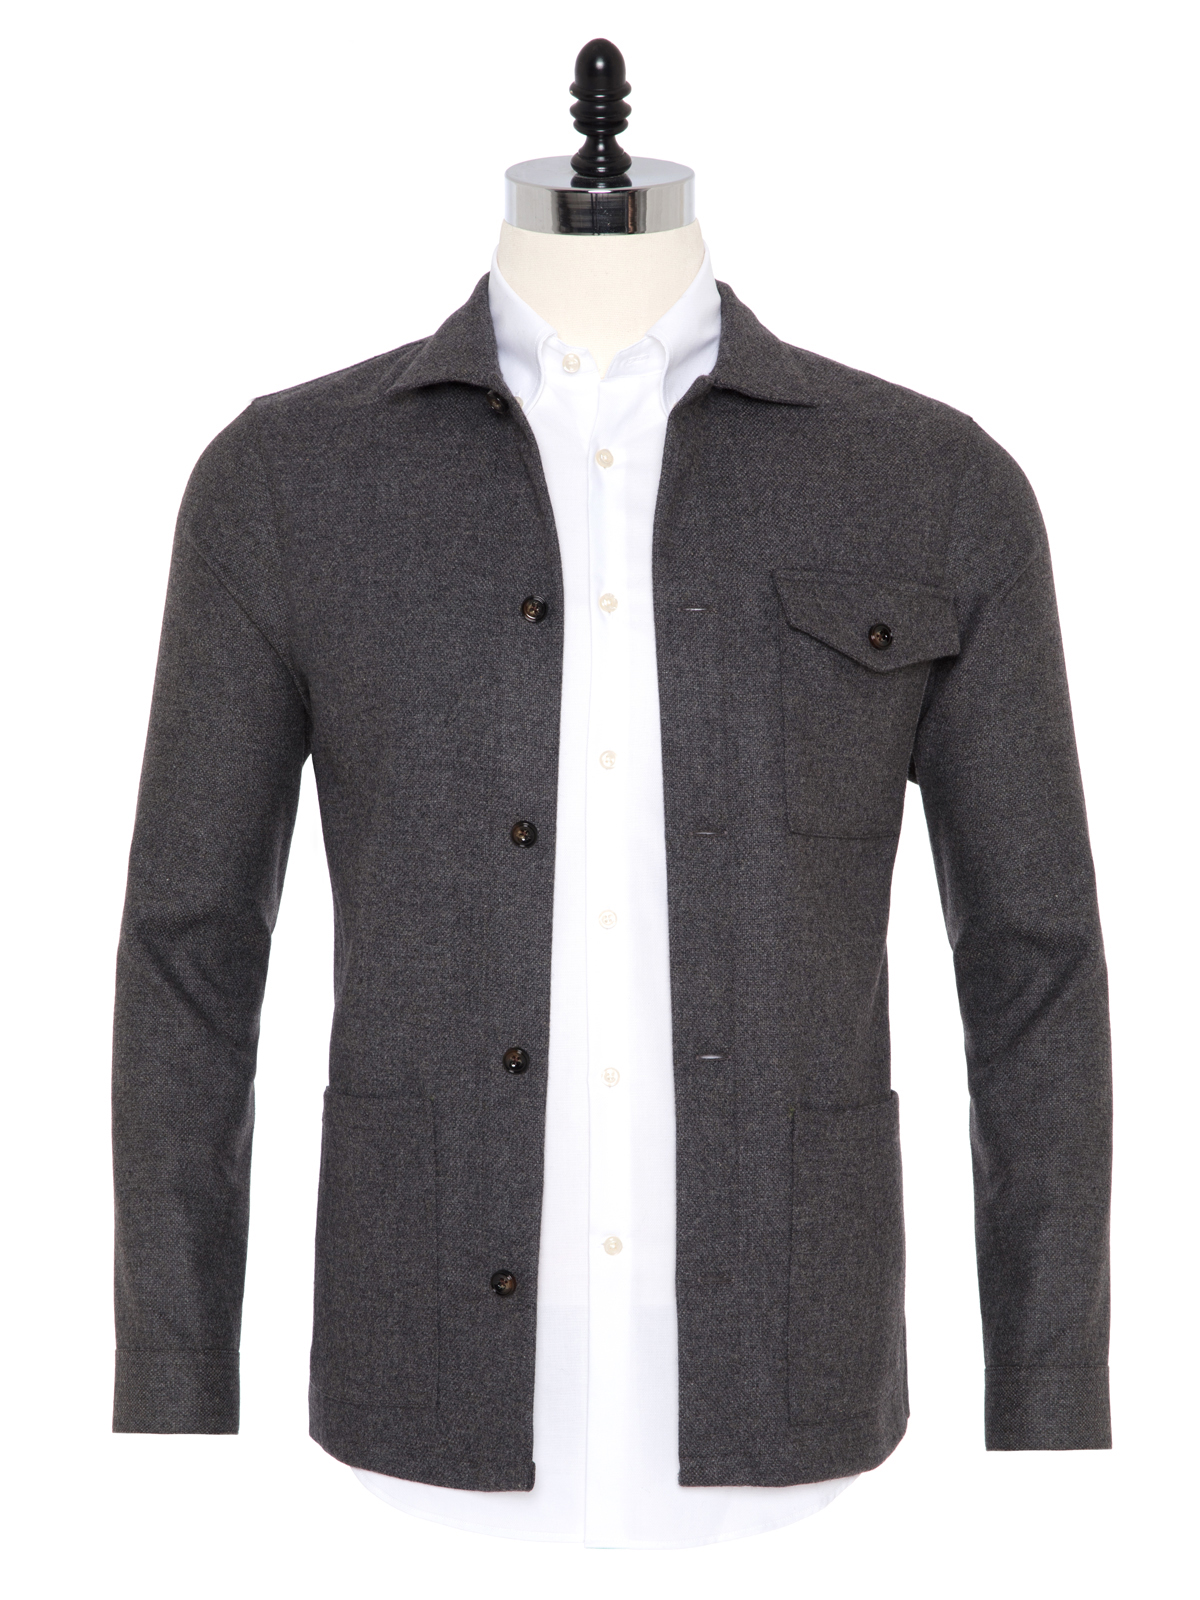 Germirli - Germirli Gri %100 Yün Tailor Fit Wool Heritage Ceket Gömlek